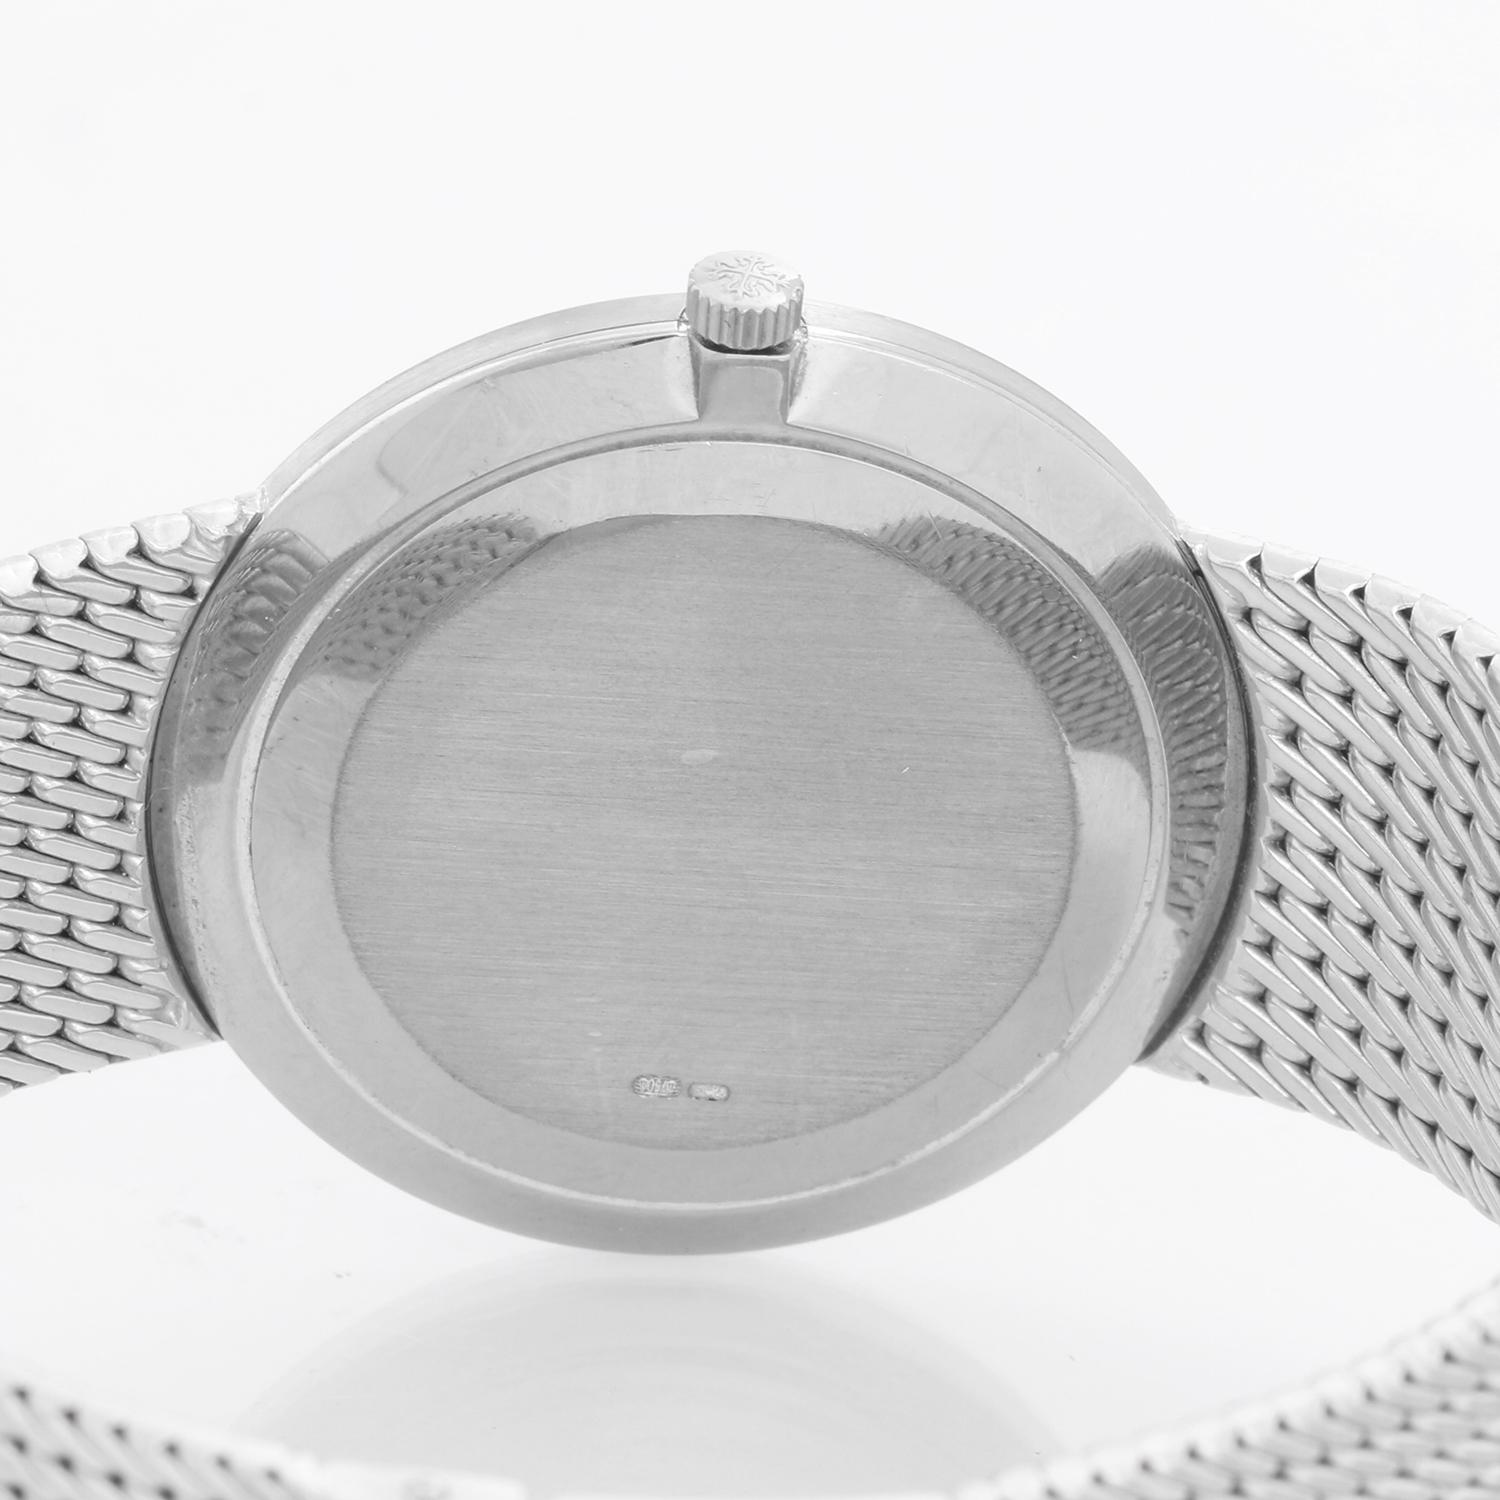 Patek Philippe Calatrava Men's 18k White Gold Watch. Ref. 3893 2